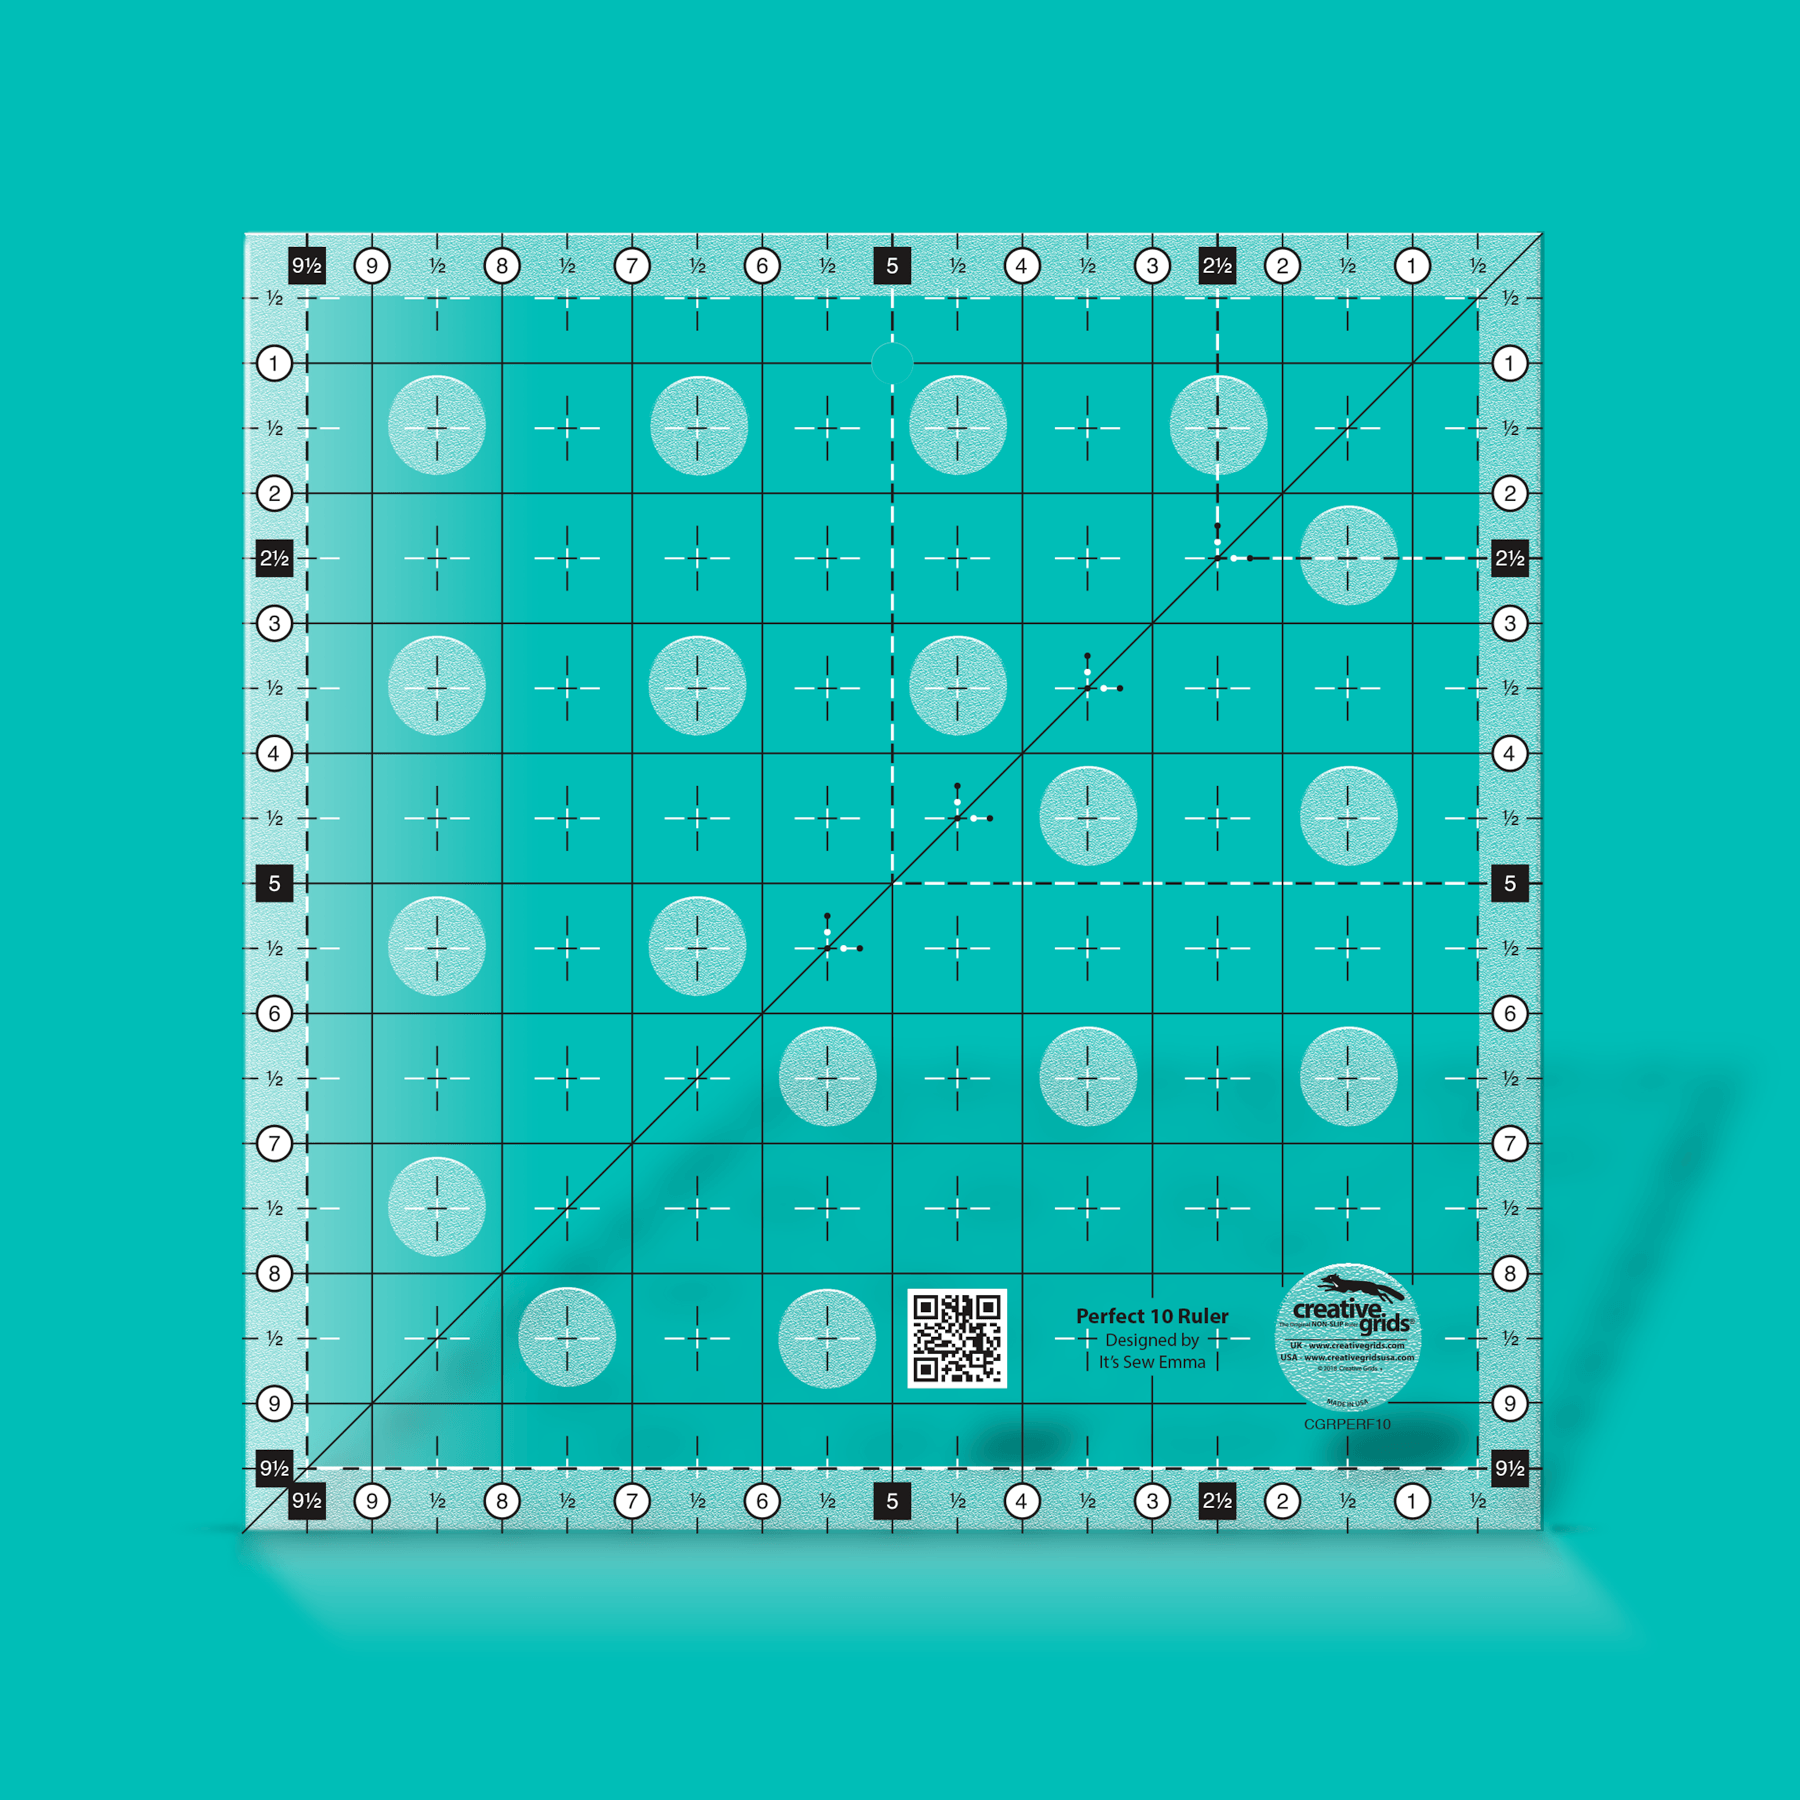 Creative Grids 30 Degree Triangle Quilt Ruler (cgrsg1)